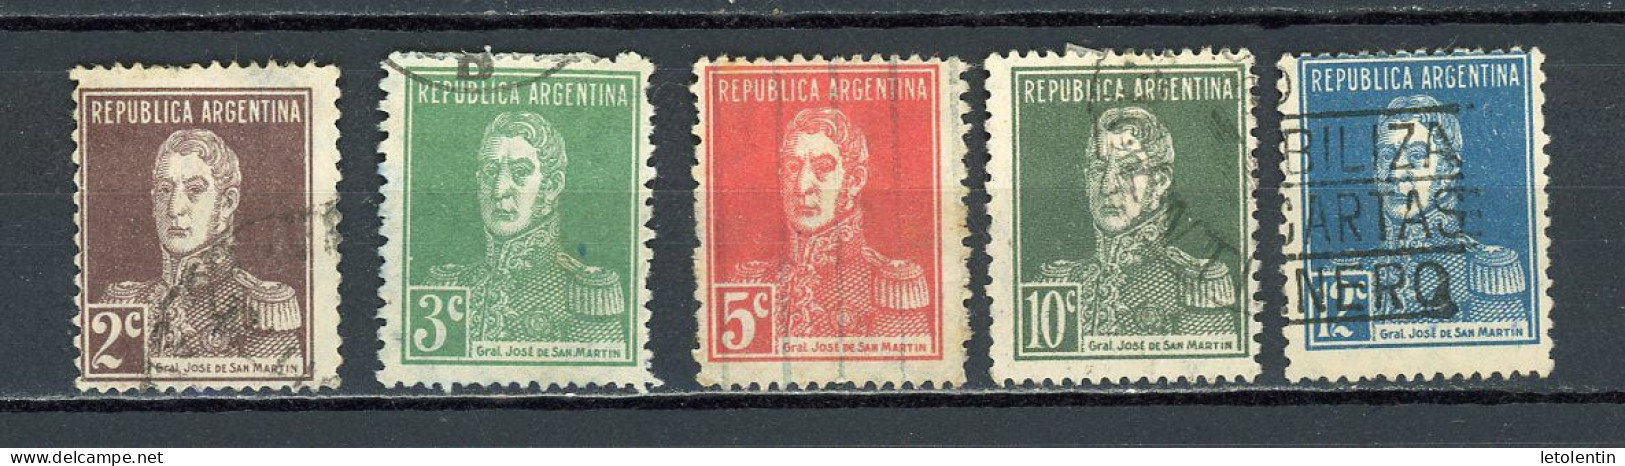 ARGENTINE : SAN MARTIN  - N° Yvert 298+299+301+302+303 Obli. - Used Stamps